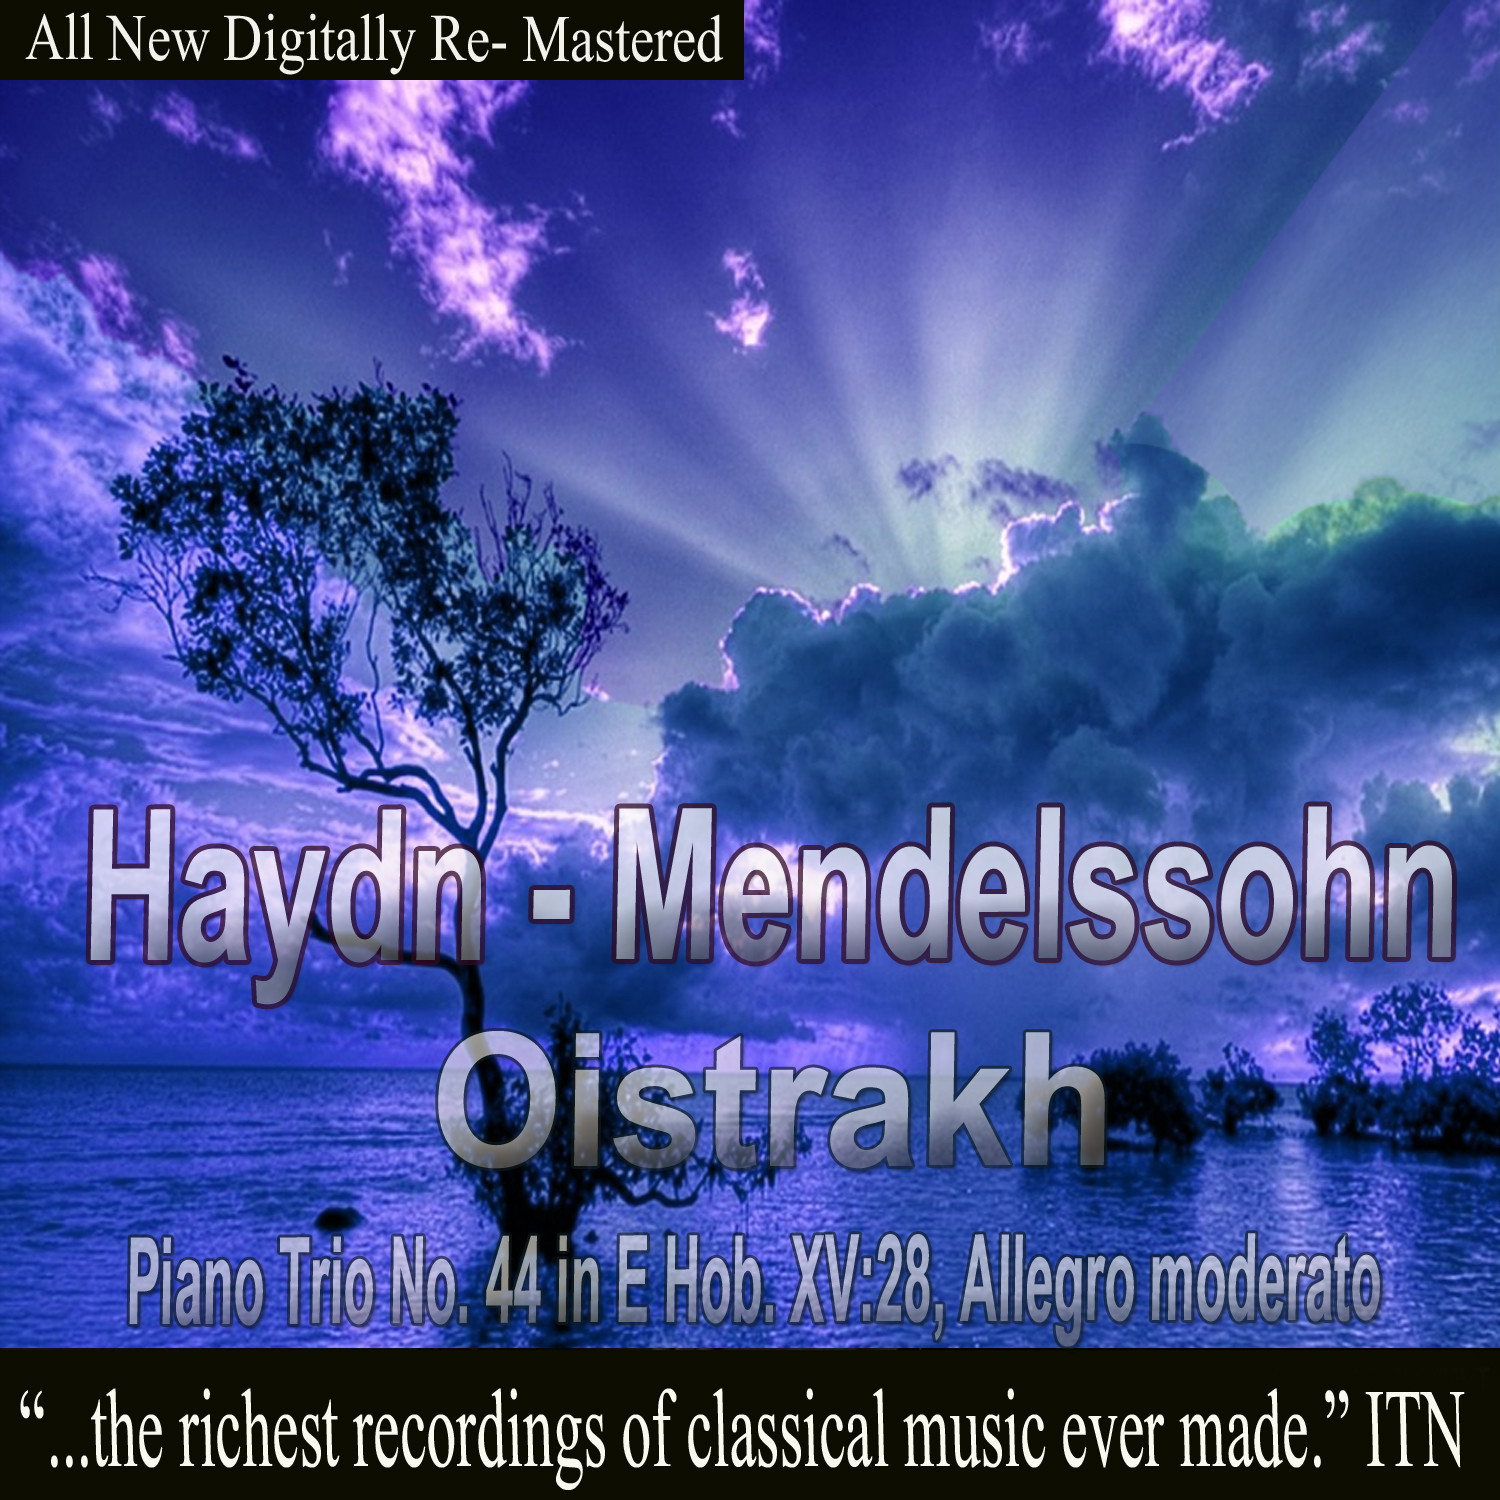 Oistrakh - Haydn, Mendelssohn - Piano Trio, No. 44 in E Hob XV 28 Allegro moderato